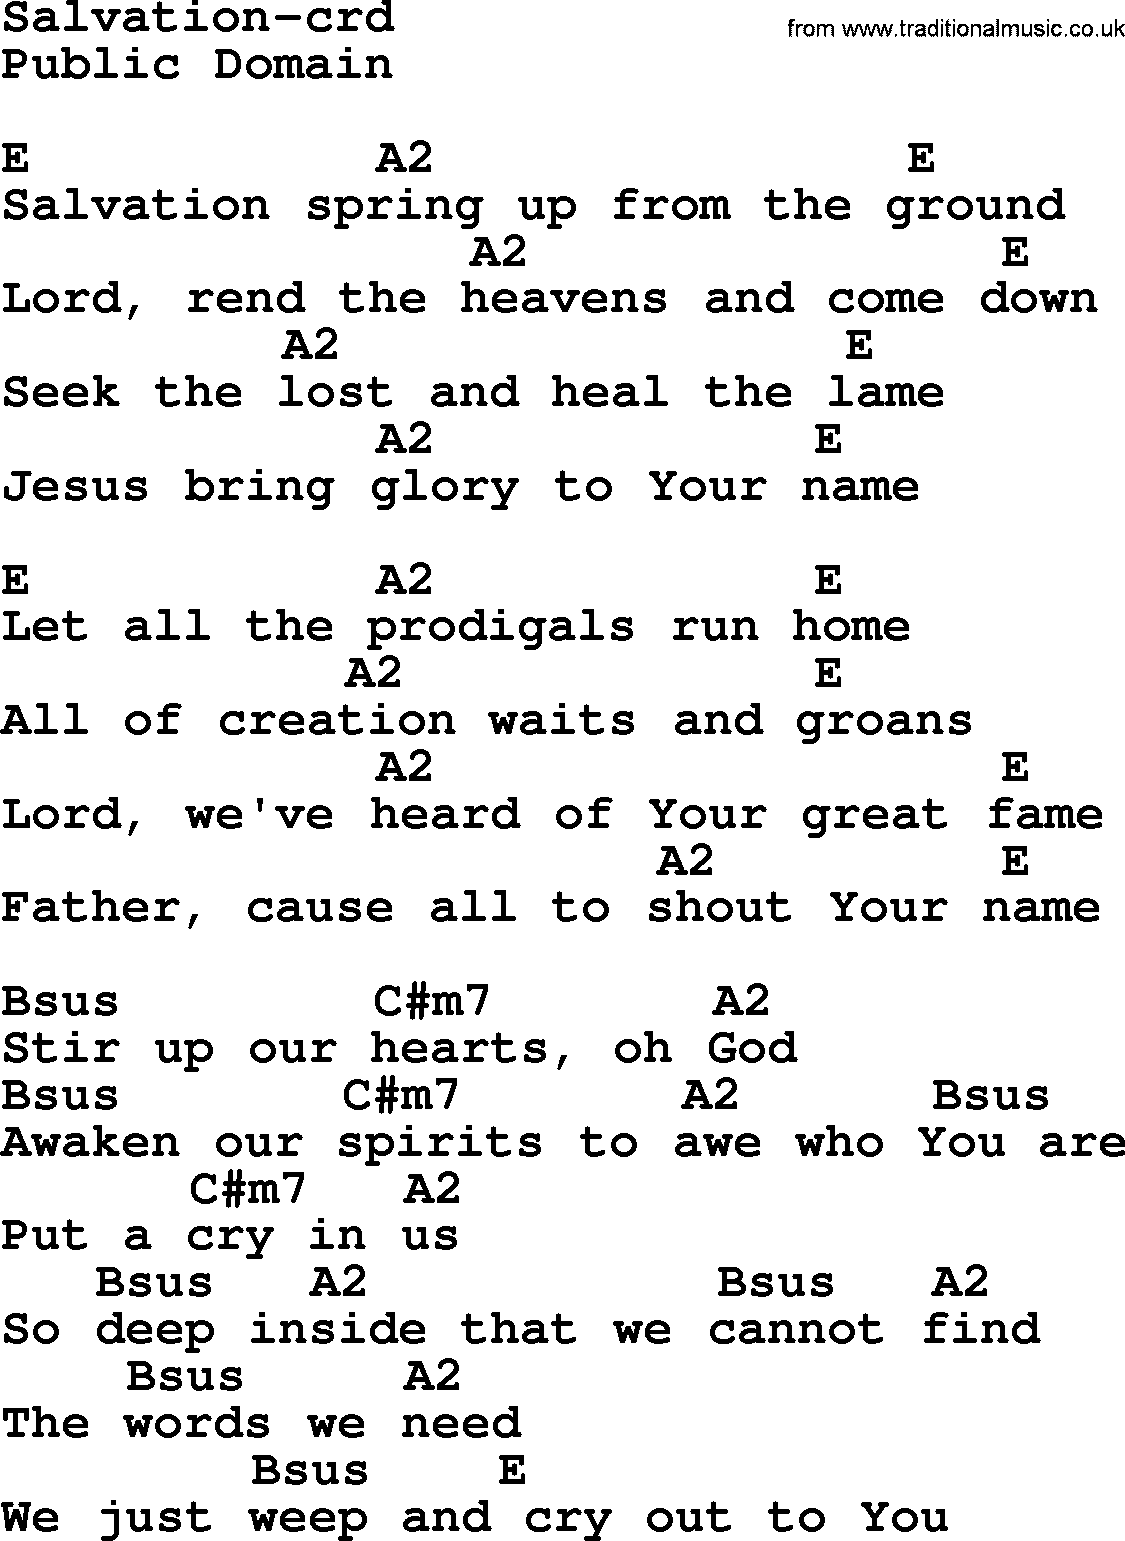 Top 500 Hymn: Salvation, lyrics and chords